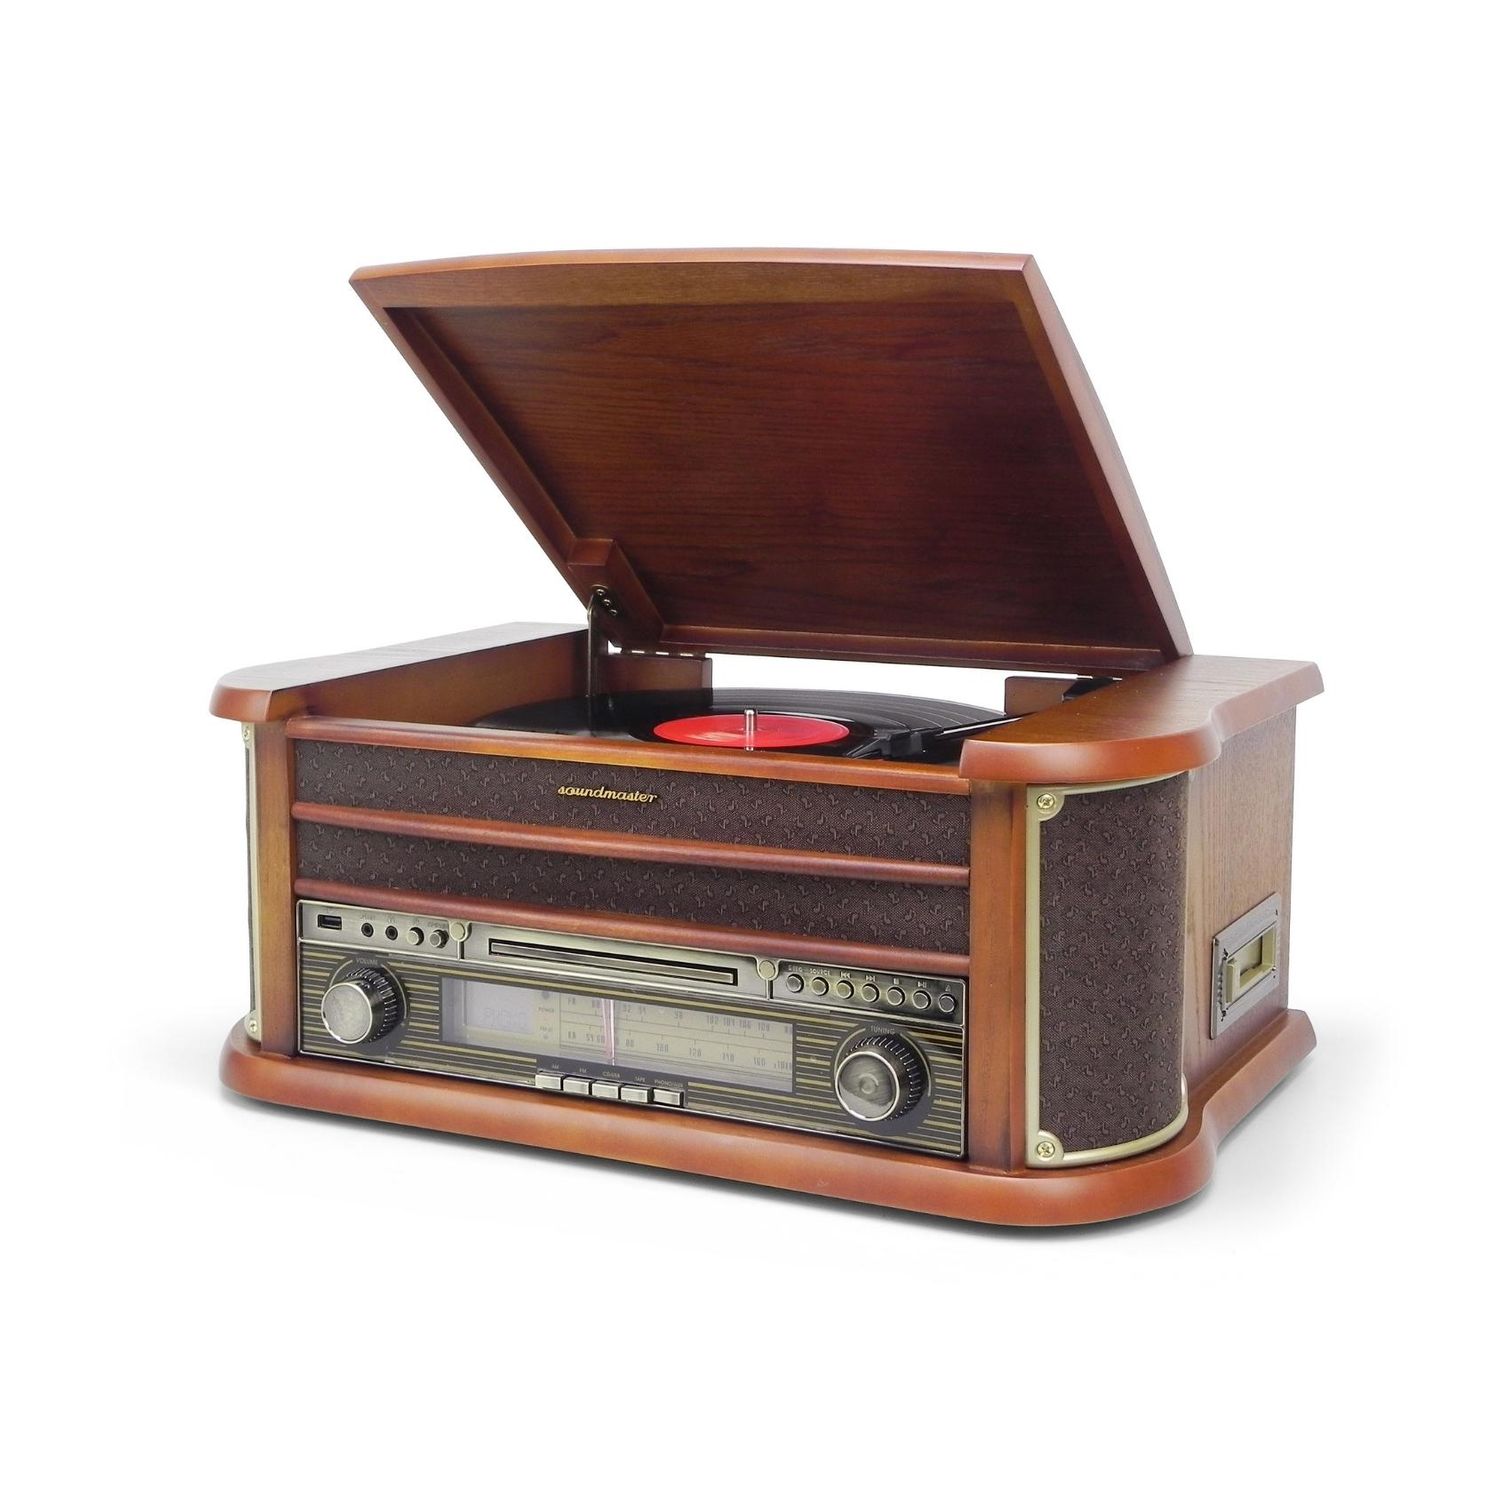 Soundmaster NR540 Retro Stereoanlage mit Plattenspieler Kompaktanlage UKW-Radio CD-Player USB Kassette Encoding Digitalisieren Nostalgie